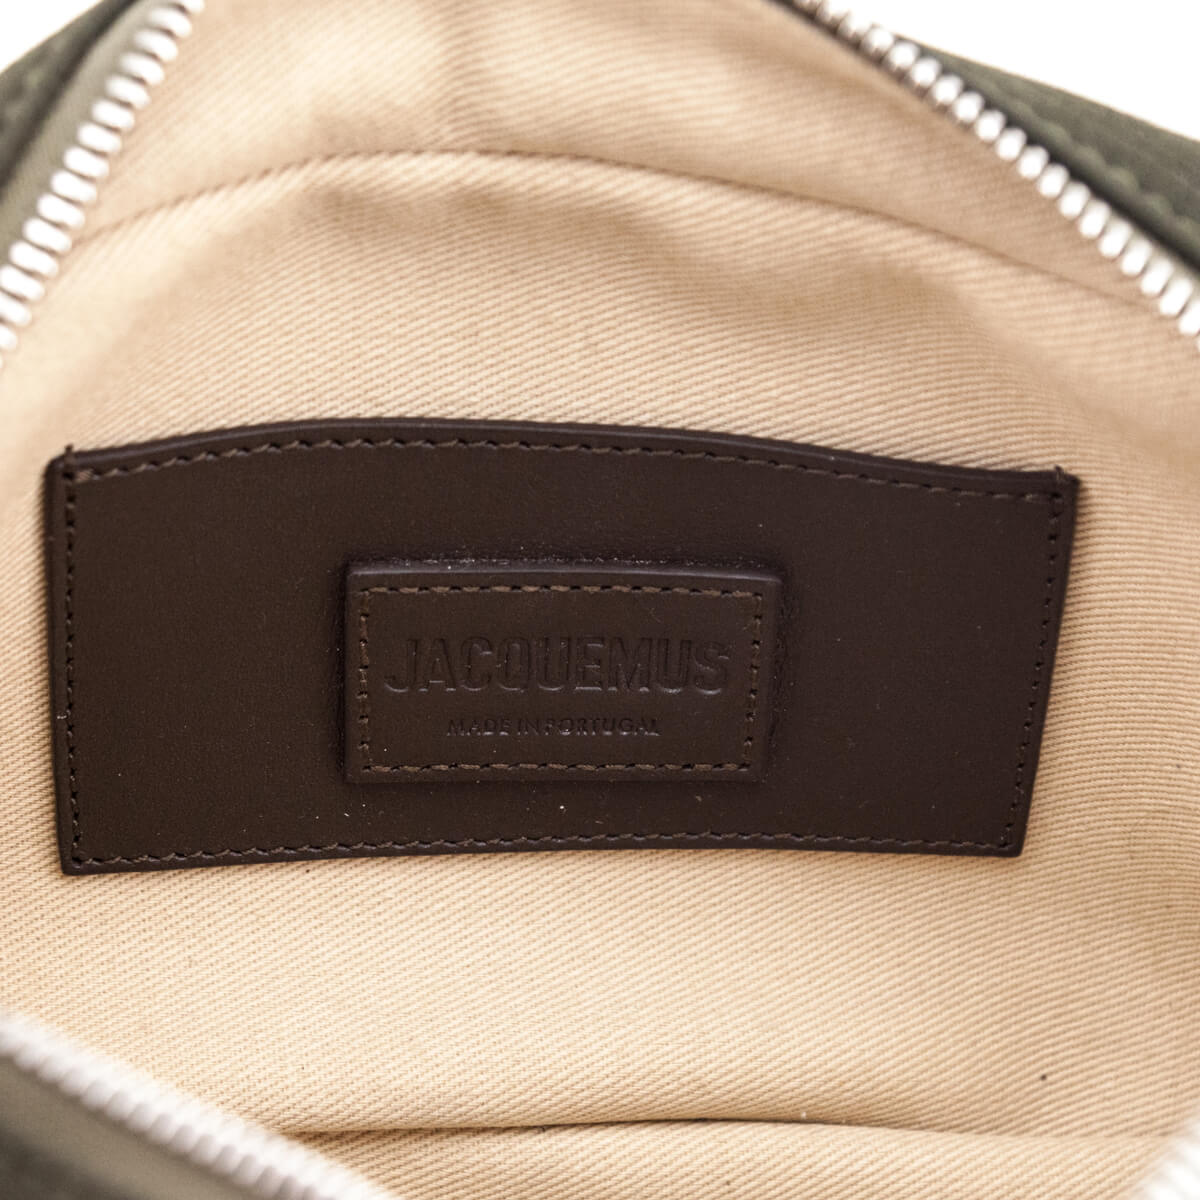 Jacquemus Khaki Textile Le Baneto Crossbody - Love that Bag etc - Preowned Authentic Designer Handbags & Preloved Fashions